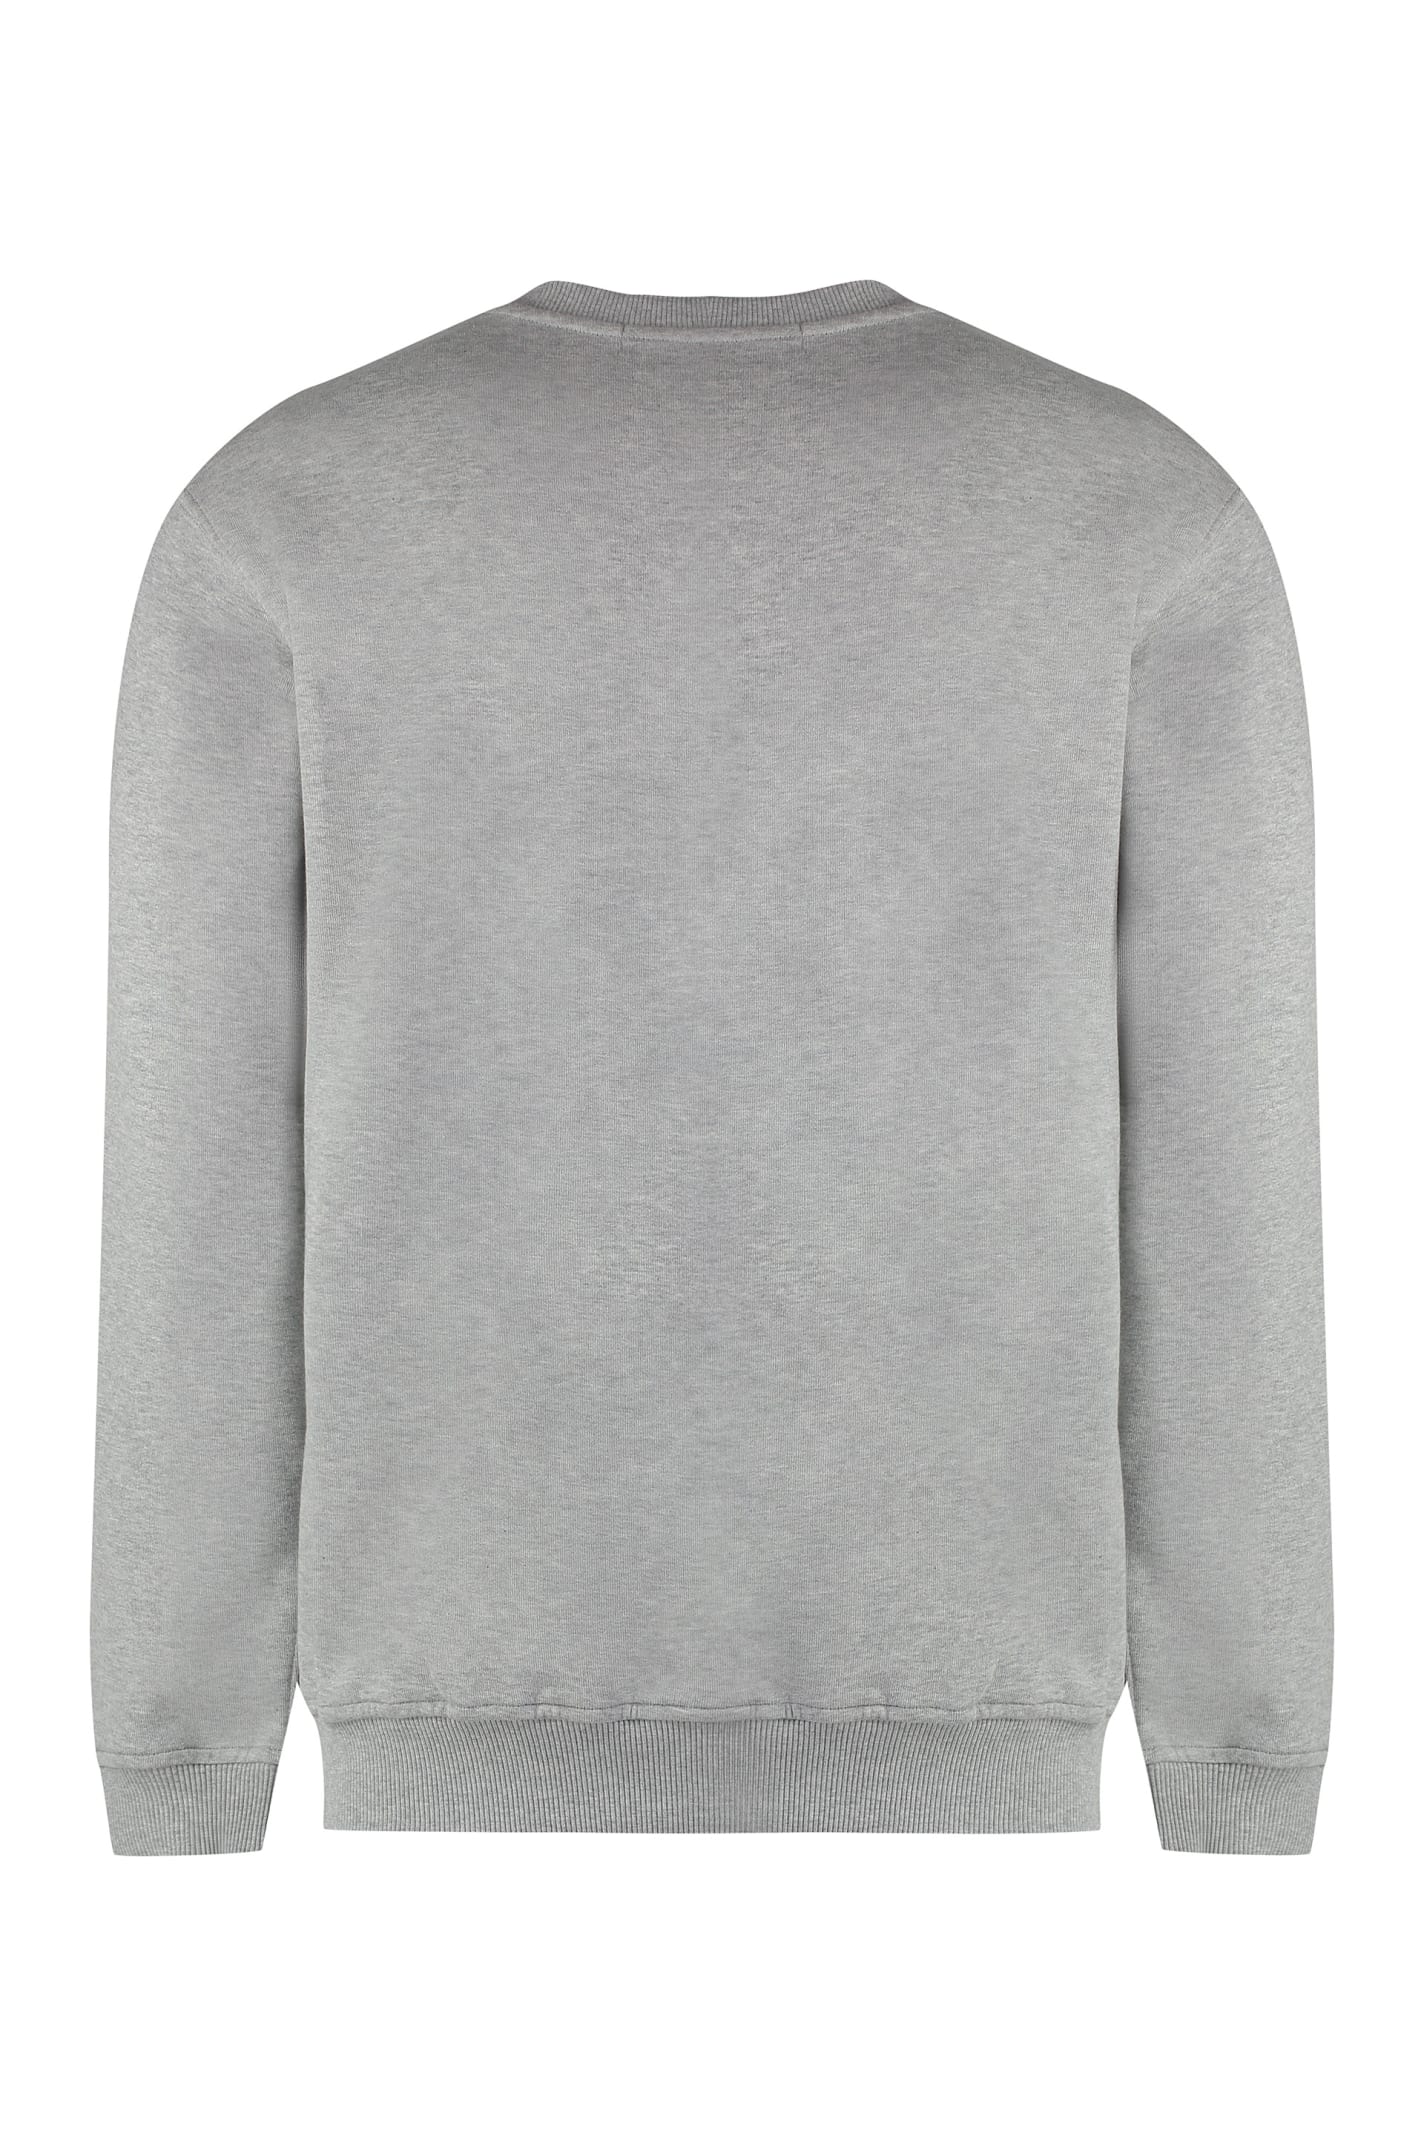 Shop Comme Des Garçons Shirt Andy Warhol Print Cotton Sweatshirt In Top Grey